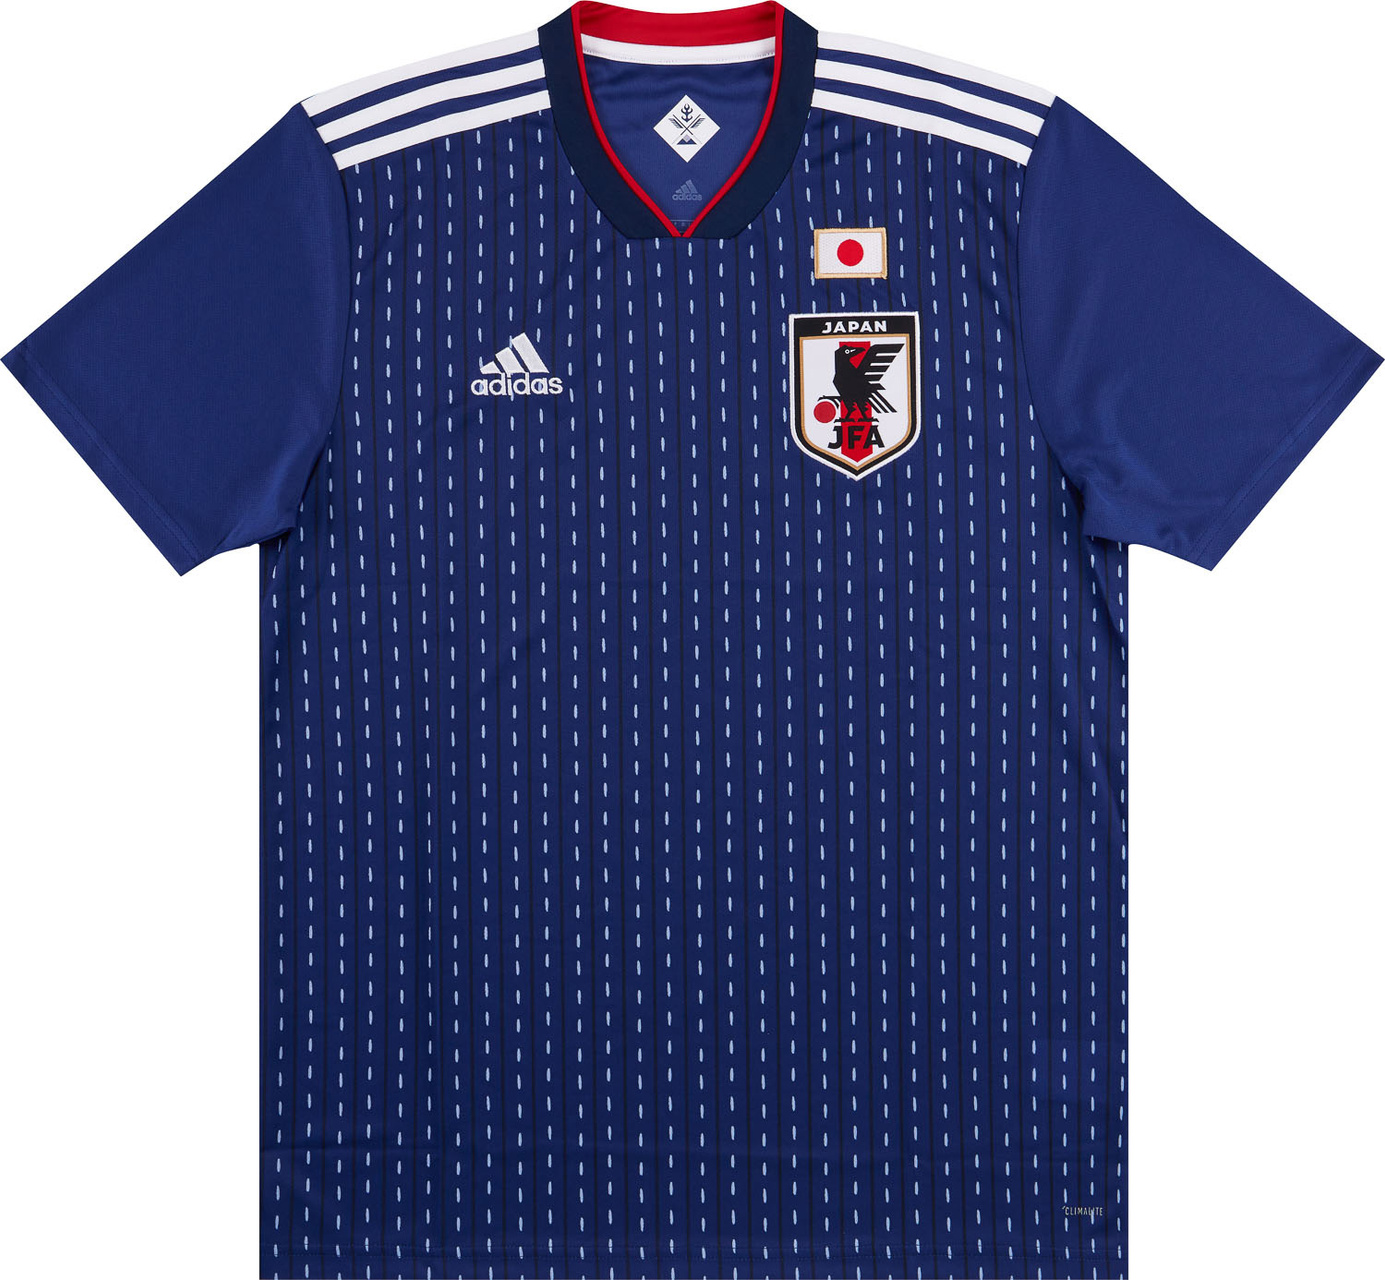 New Season Japan Away football shirt 2020 - 2022.